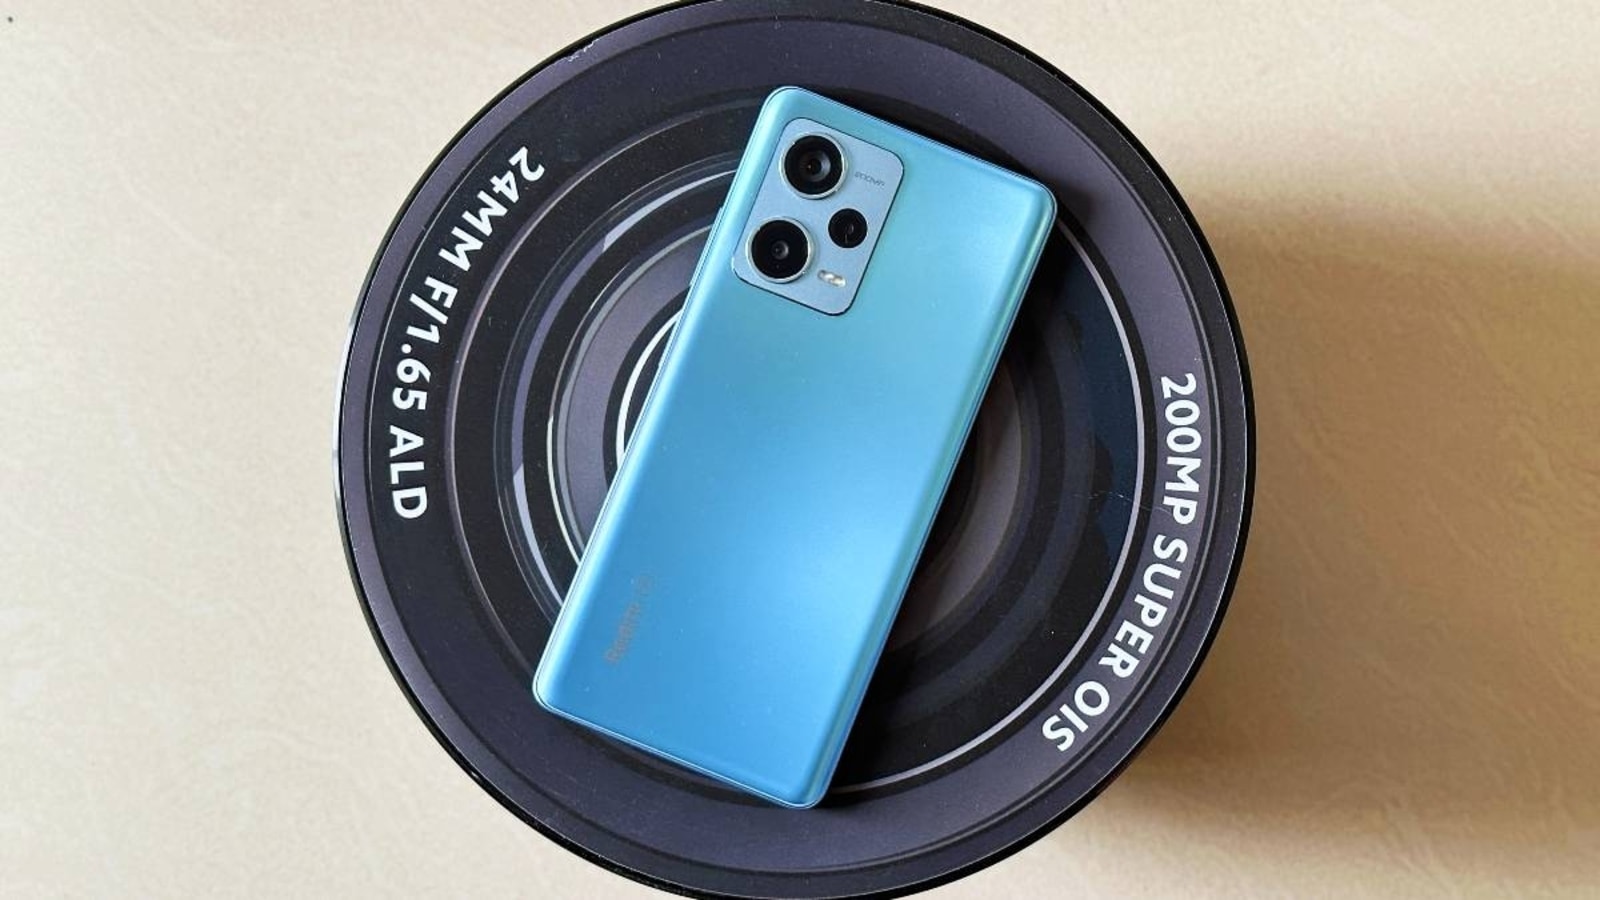 Realme 12 Pro Plus Will Have 200 Megapixel Camera